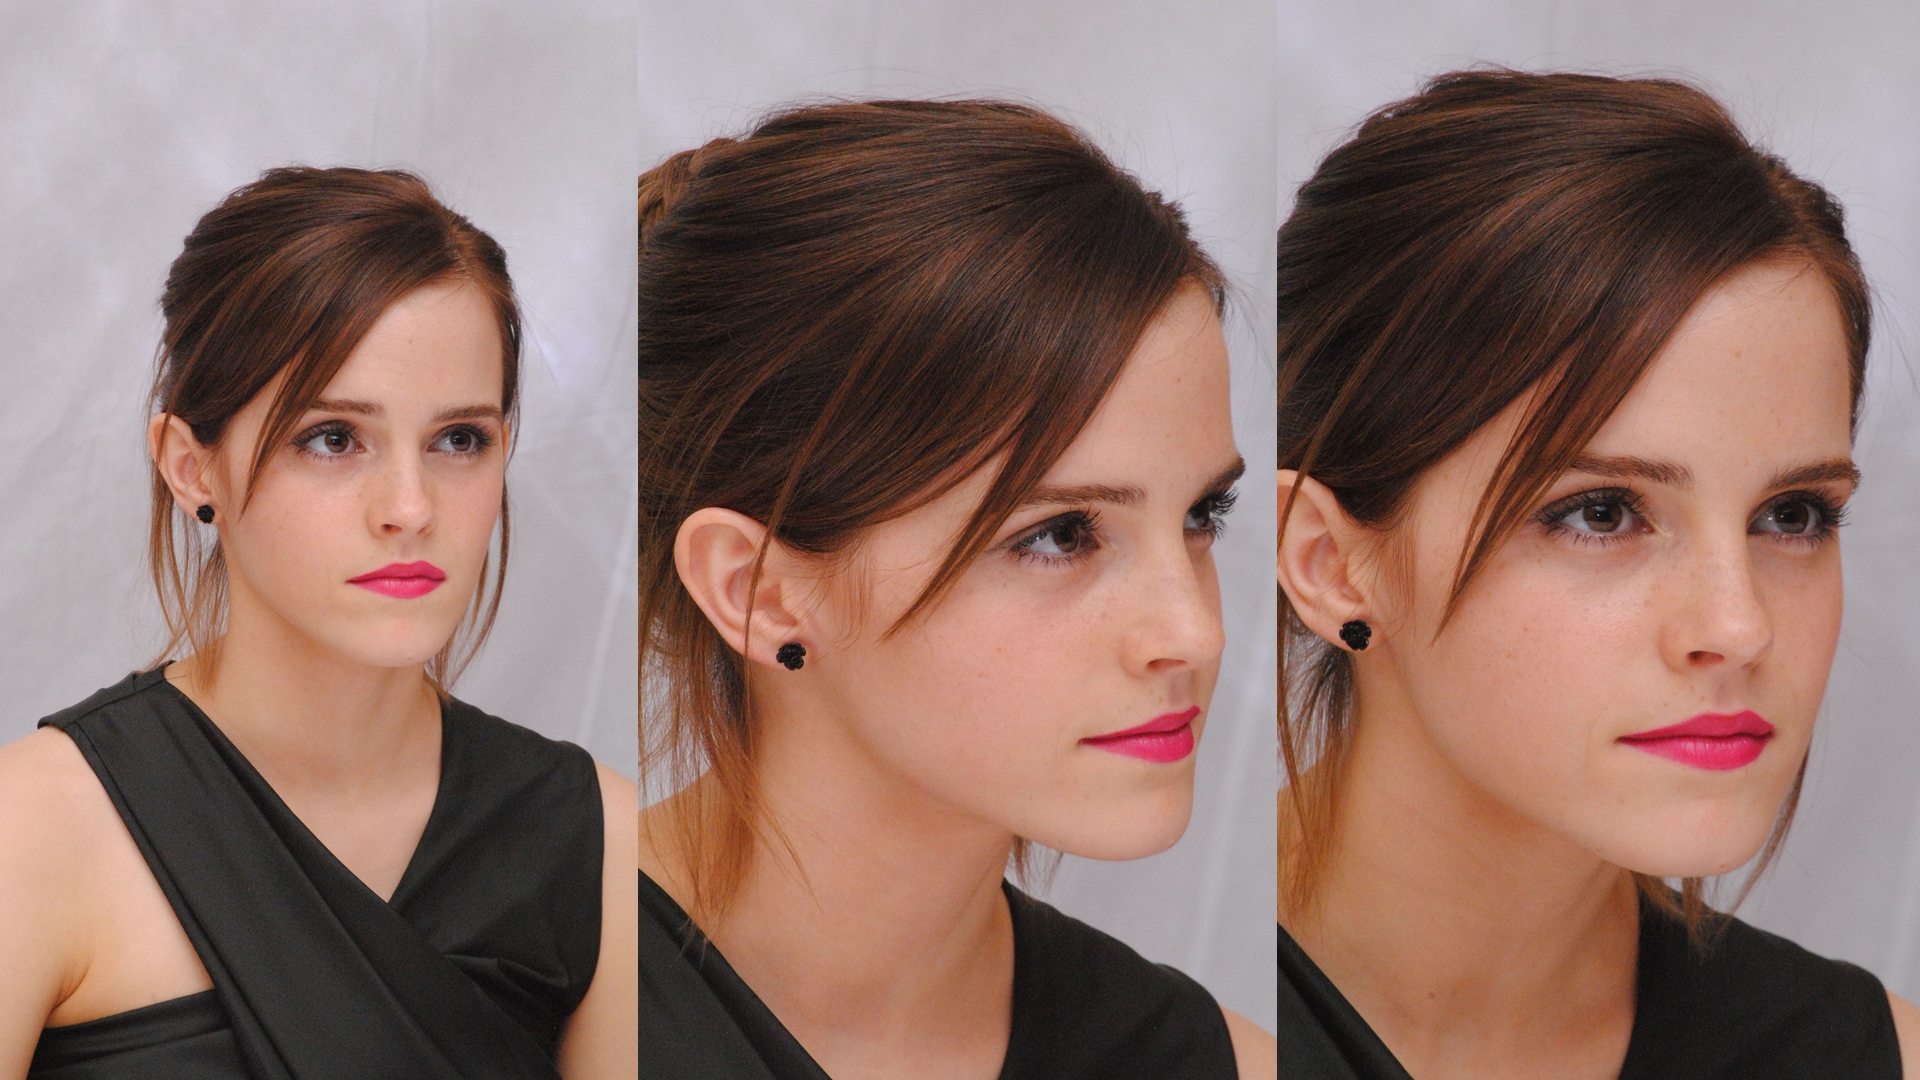 People 1920x1080 Emma Watson women actress lipstick face short hair celebrity collage